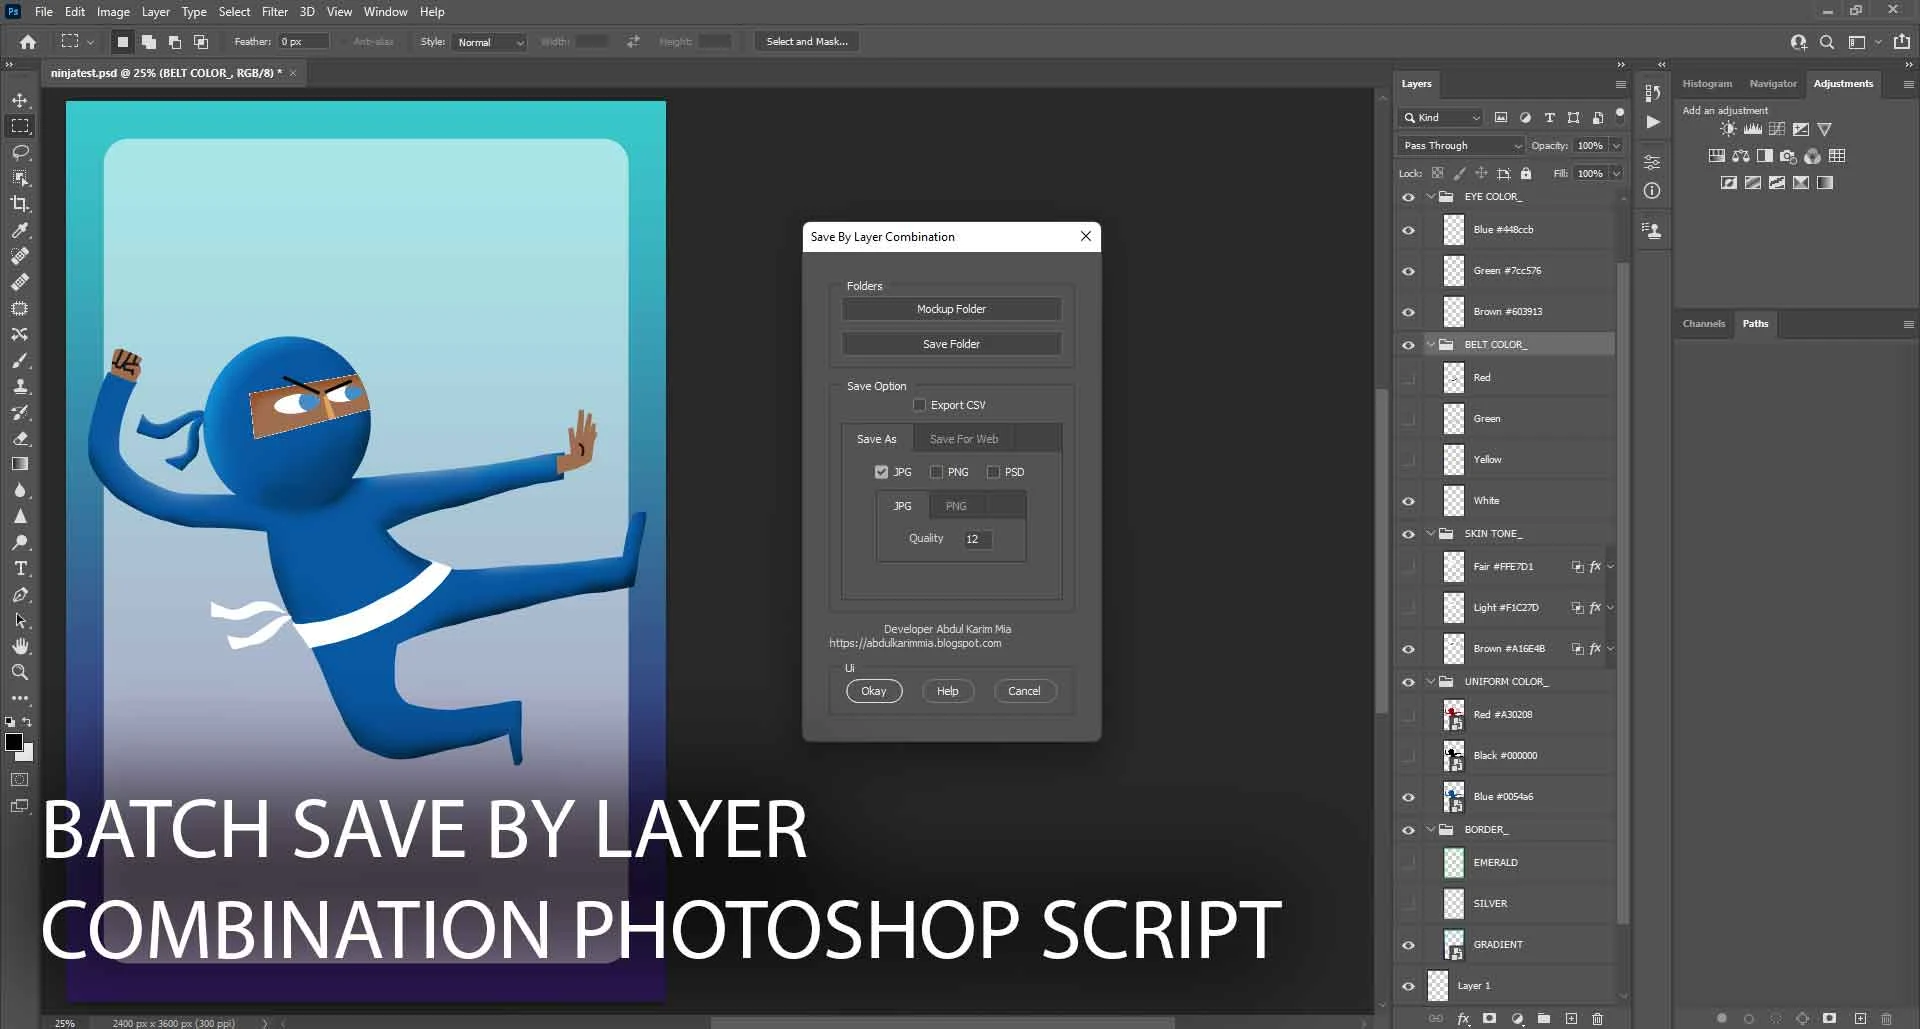 Batch Save by layer Combination Photoshop script